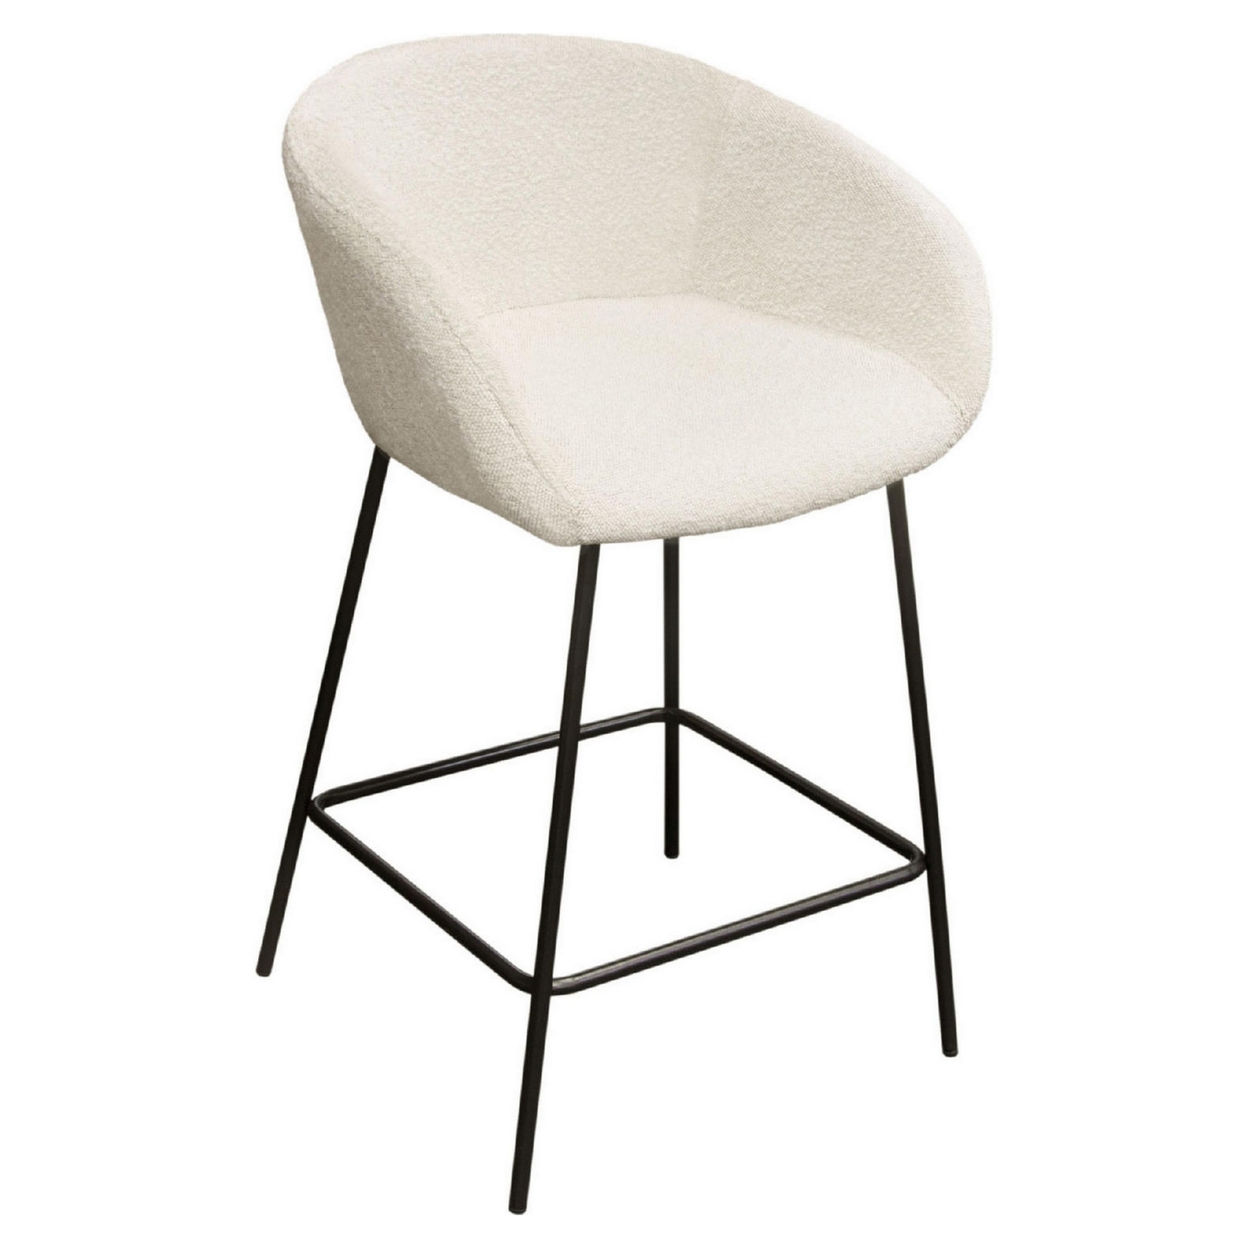 Oke 27 Inch Counter Stool Chair, Set Of 2, Black, Ivory Boucle Upholstery- Saltoro Sherpi